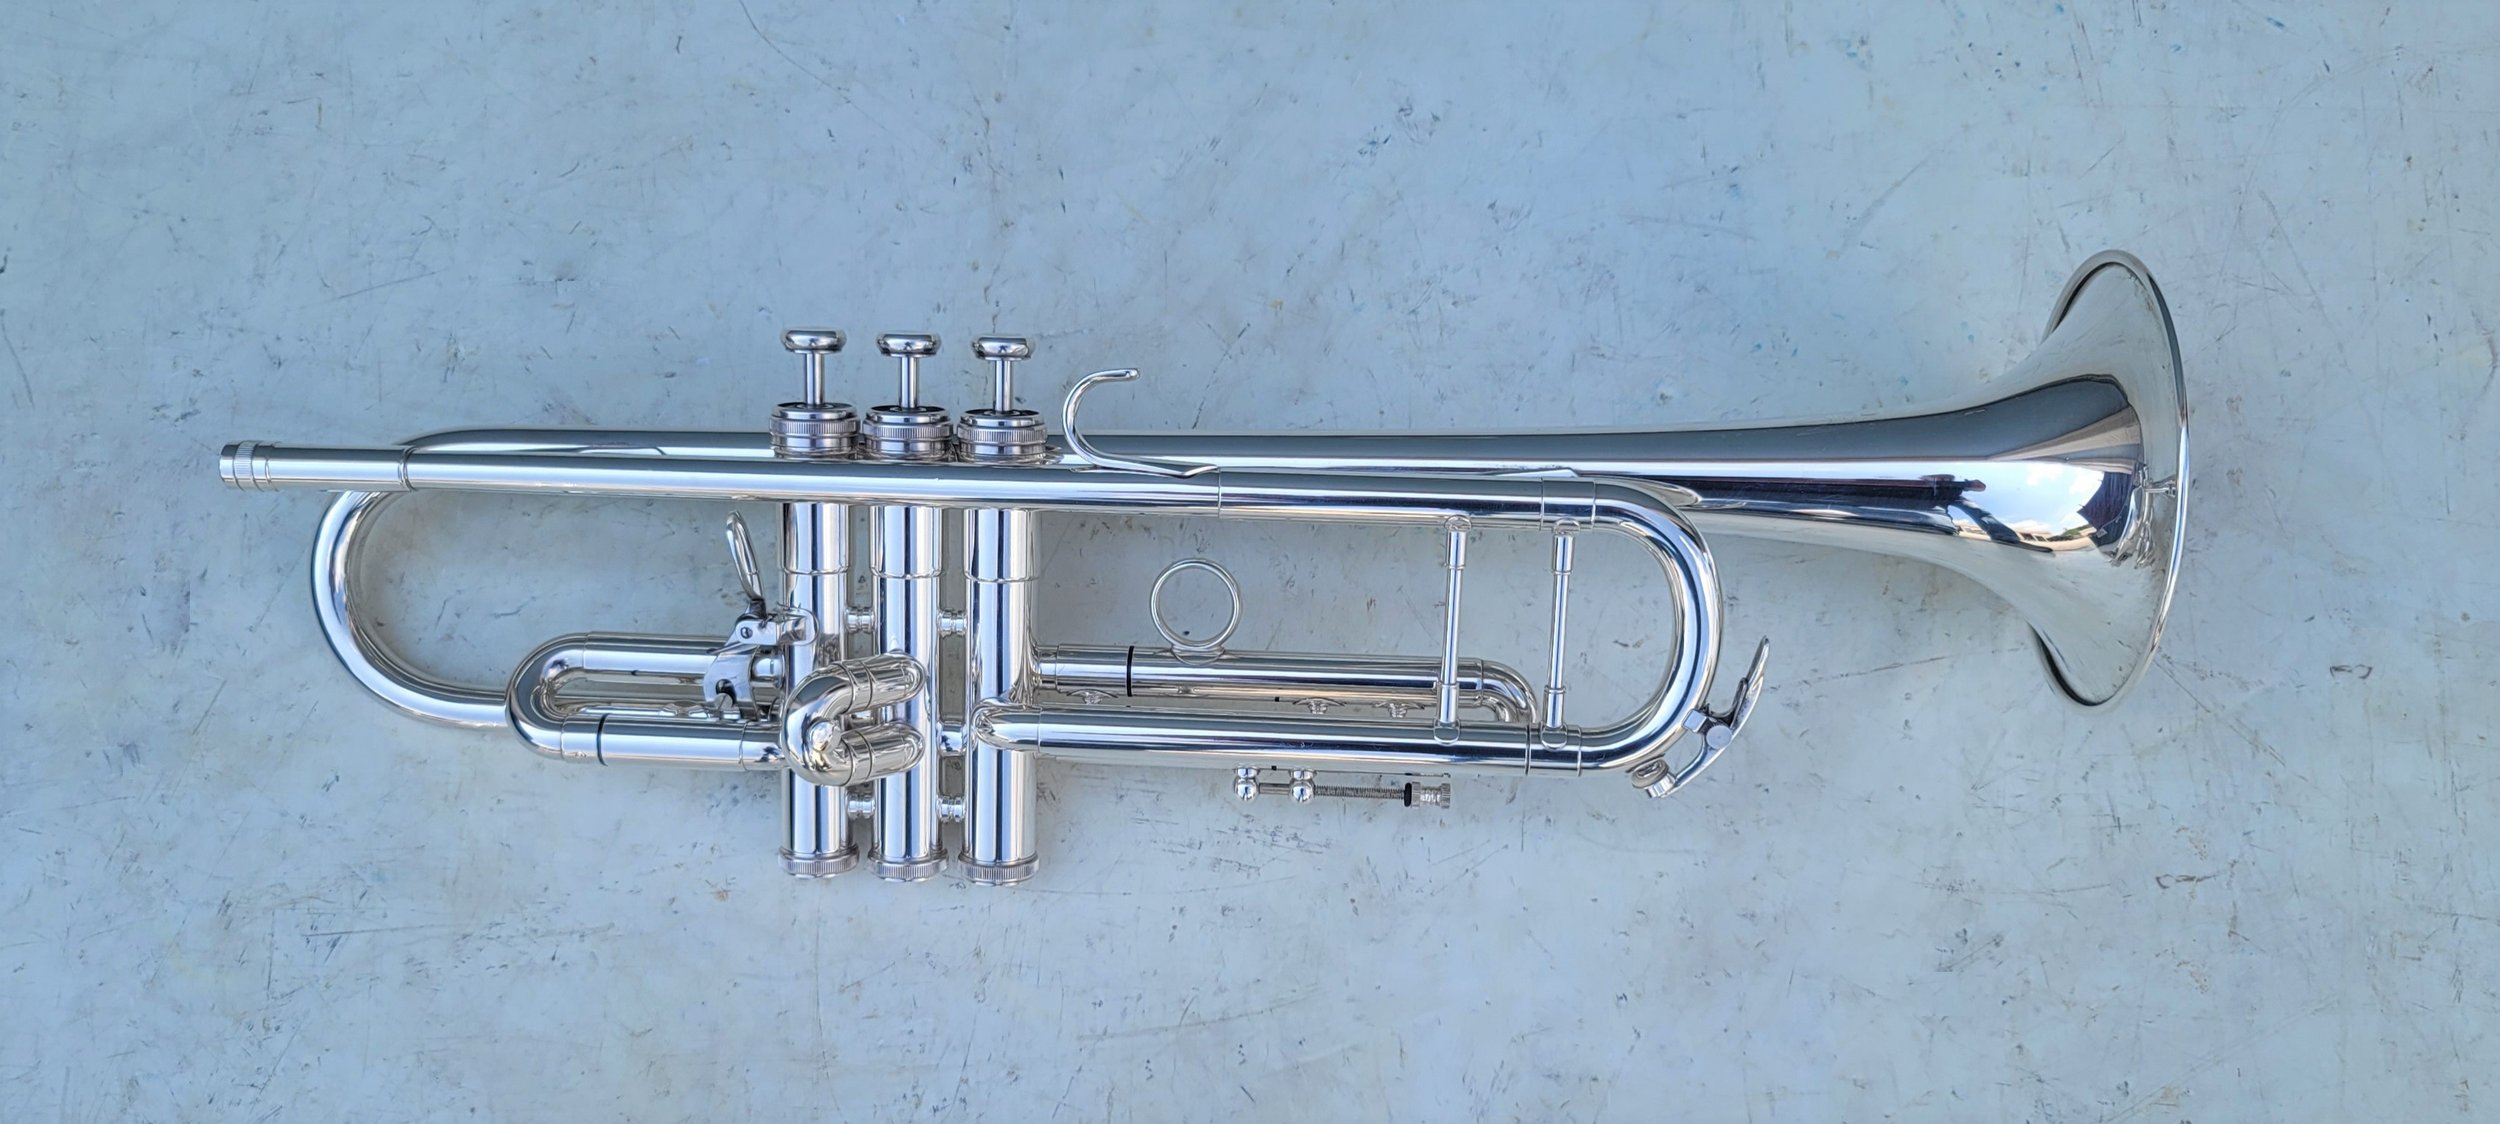 MOLLE VALVOLE VALVE ORIGINALE King Parts per vecchia tromba trumpet silverflair 606 